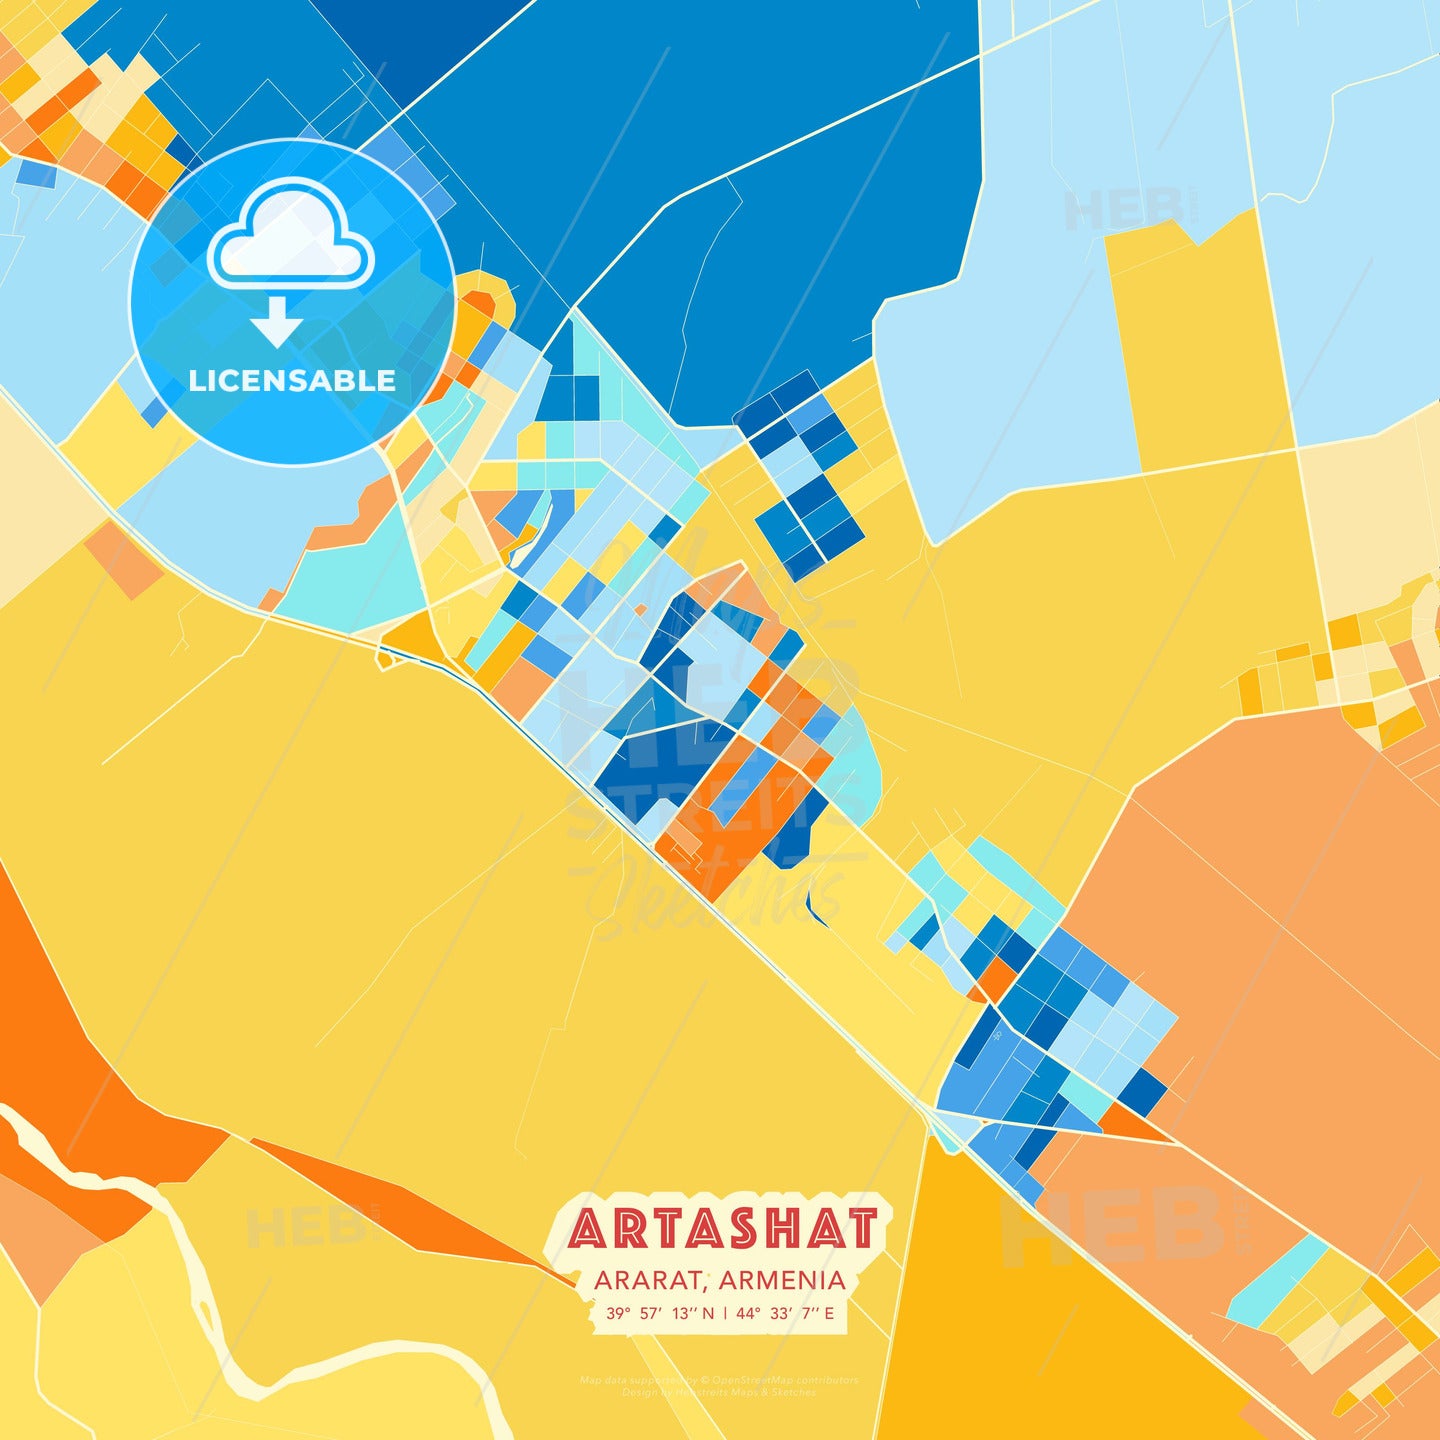 Artashat, Ararat, Armenia, map - HEBSTREITS Sketches